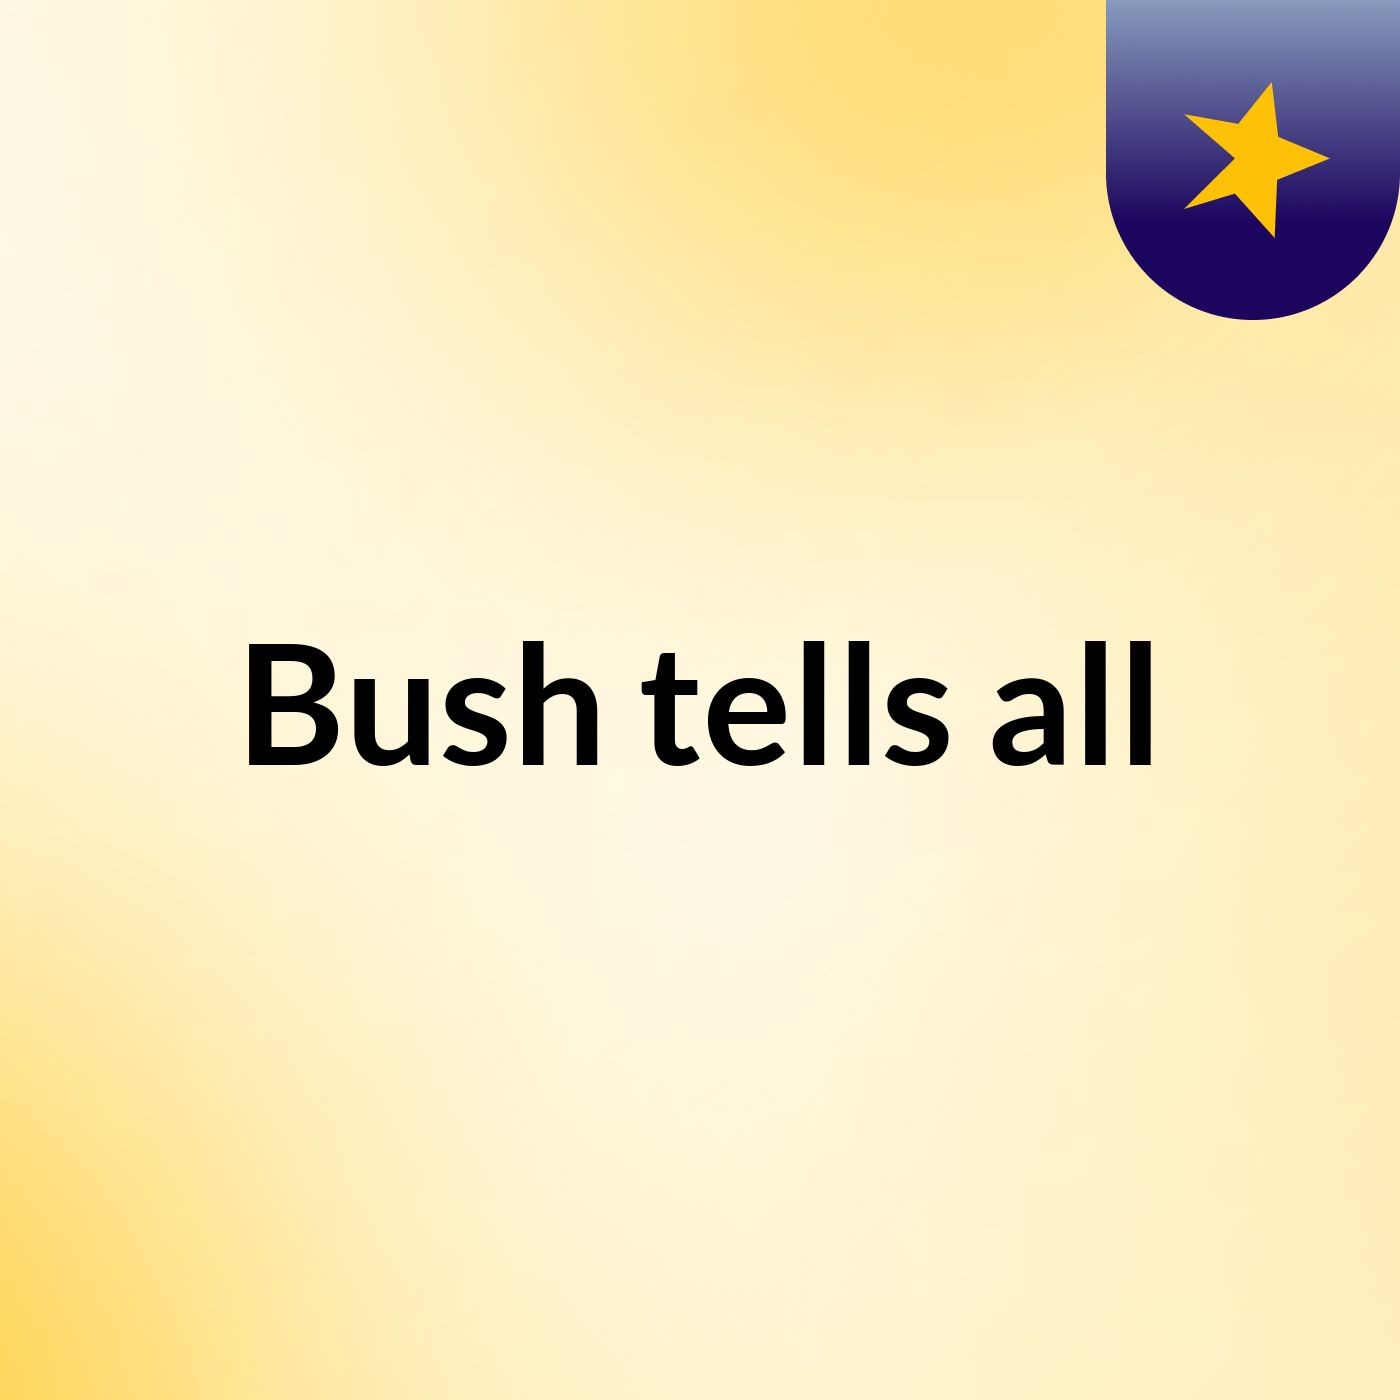 Bush tells all